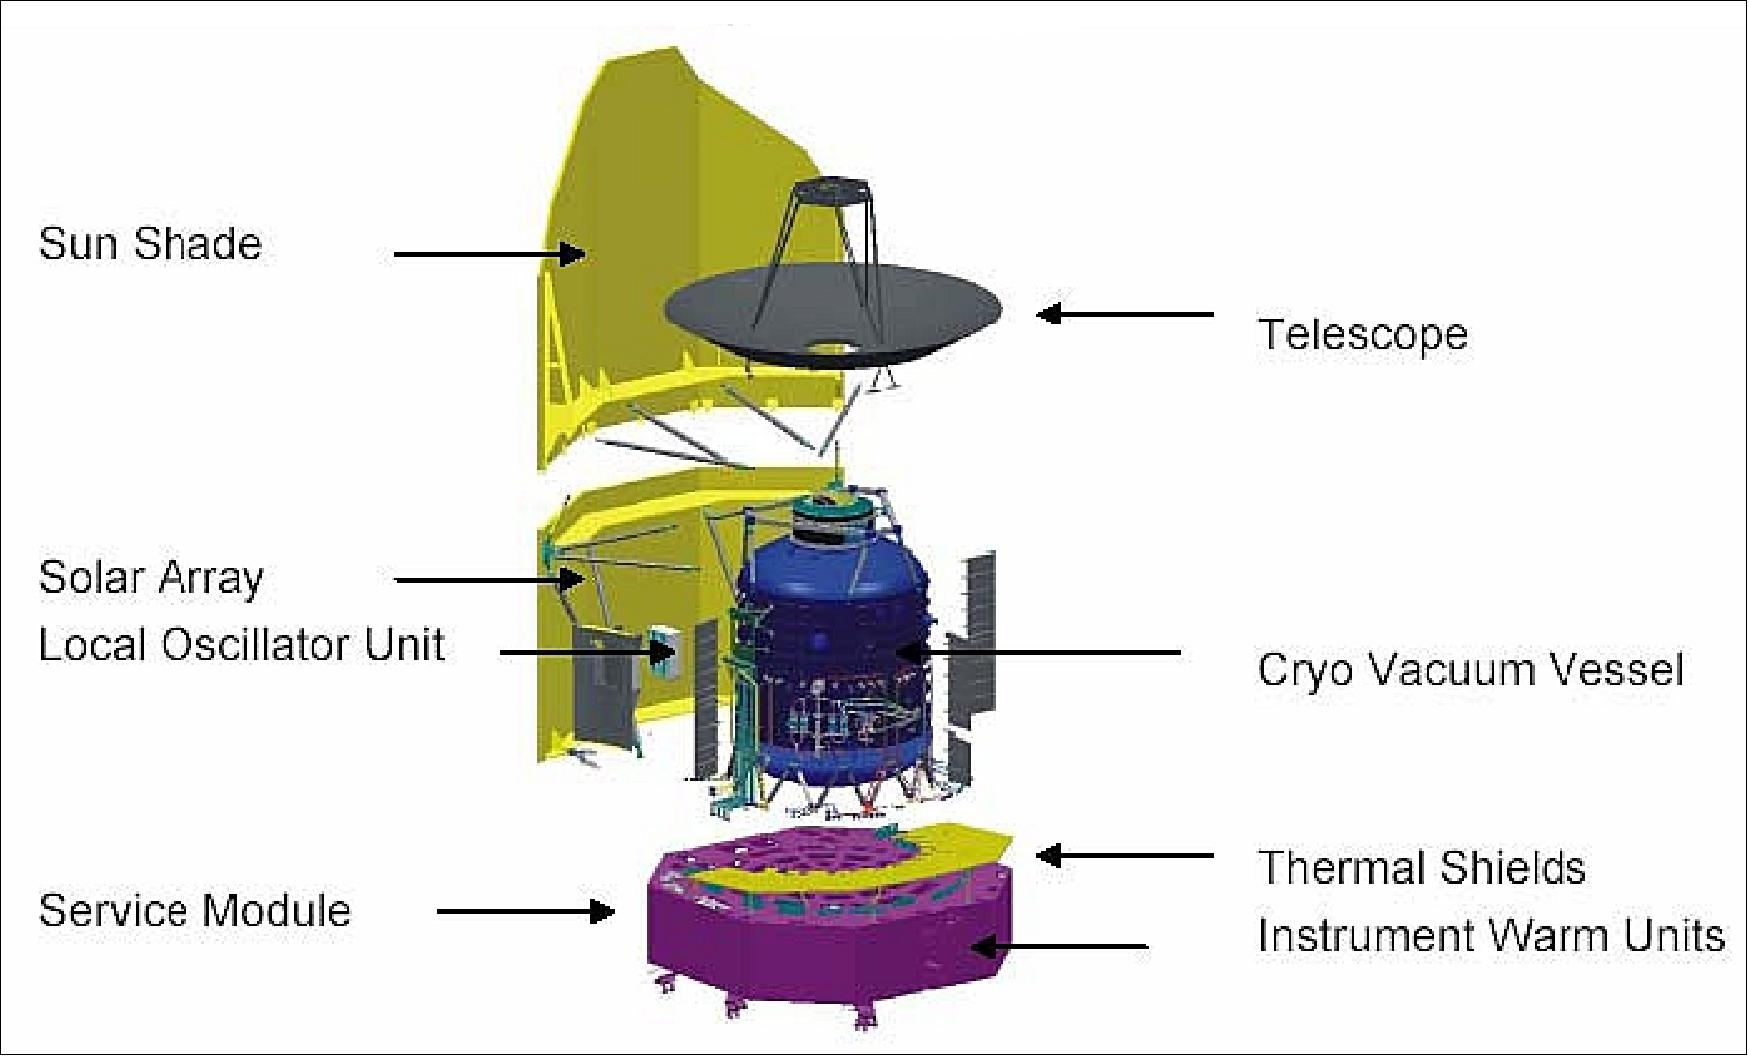 Figure 5: Schematic view of the Herschel spacecraft and its major components (image credit: ESA) 16)